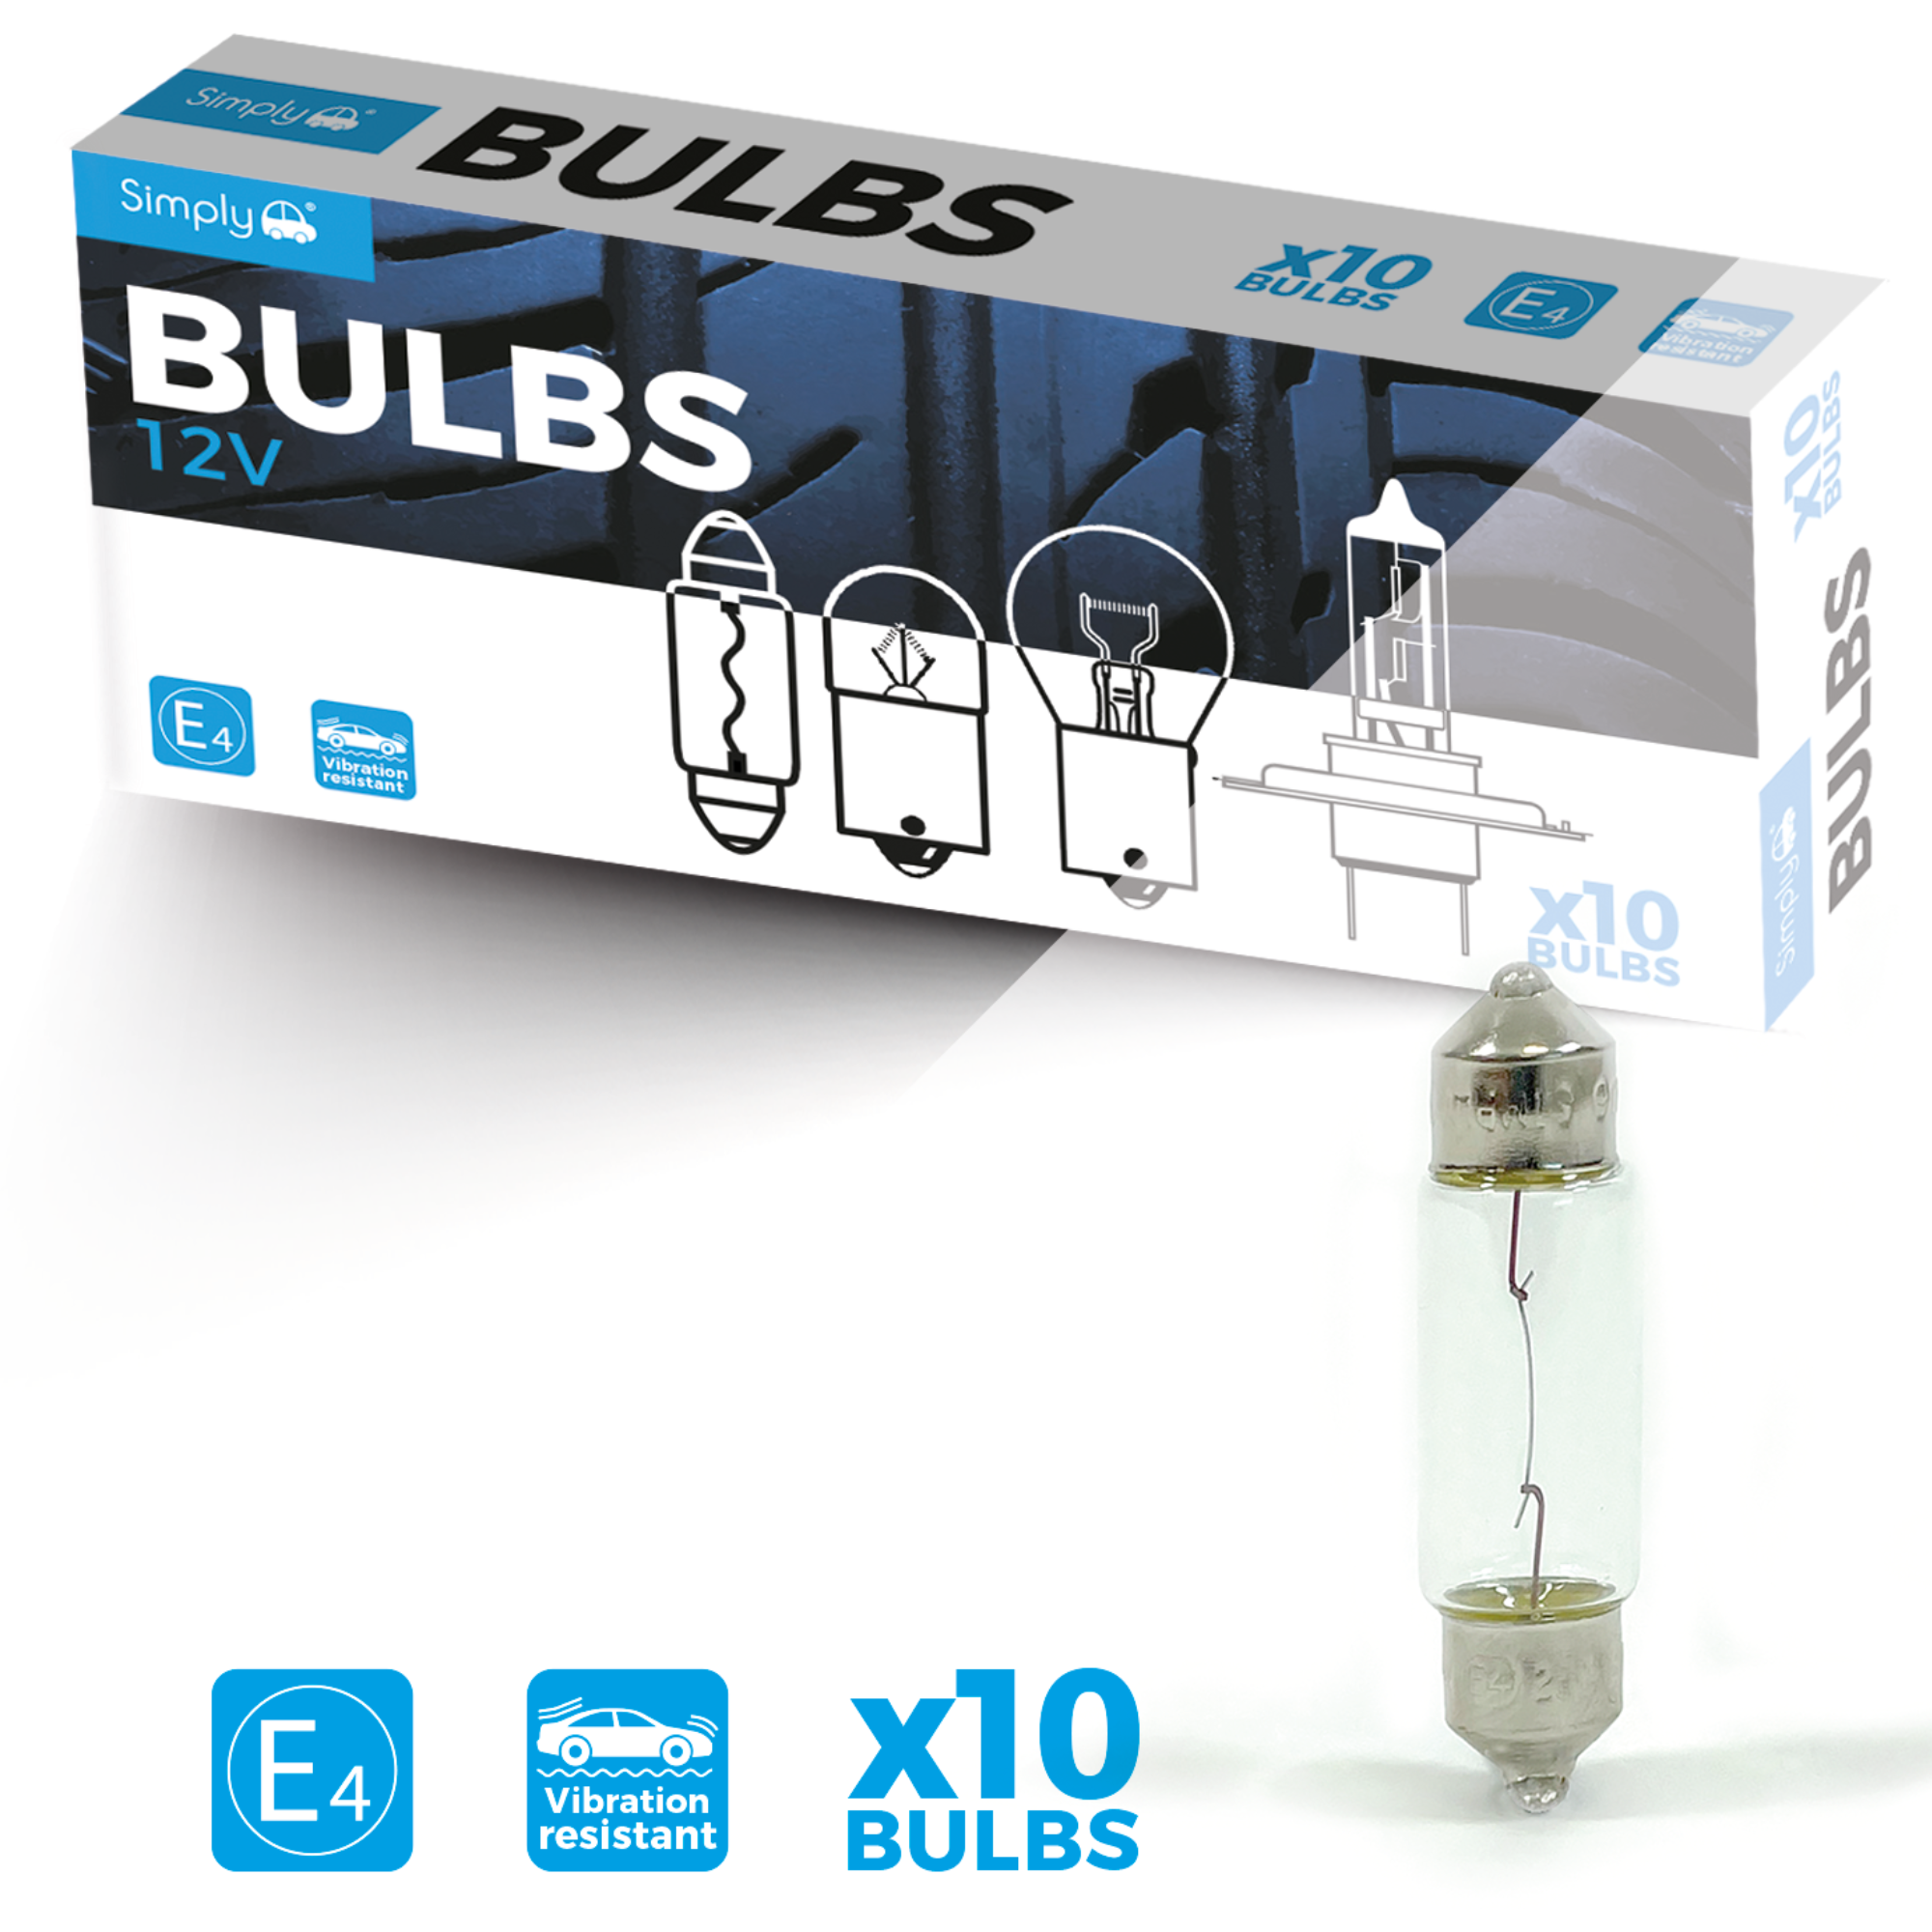 Festoon Bulb (265) 12v 10w, Bulbs